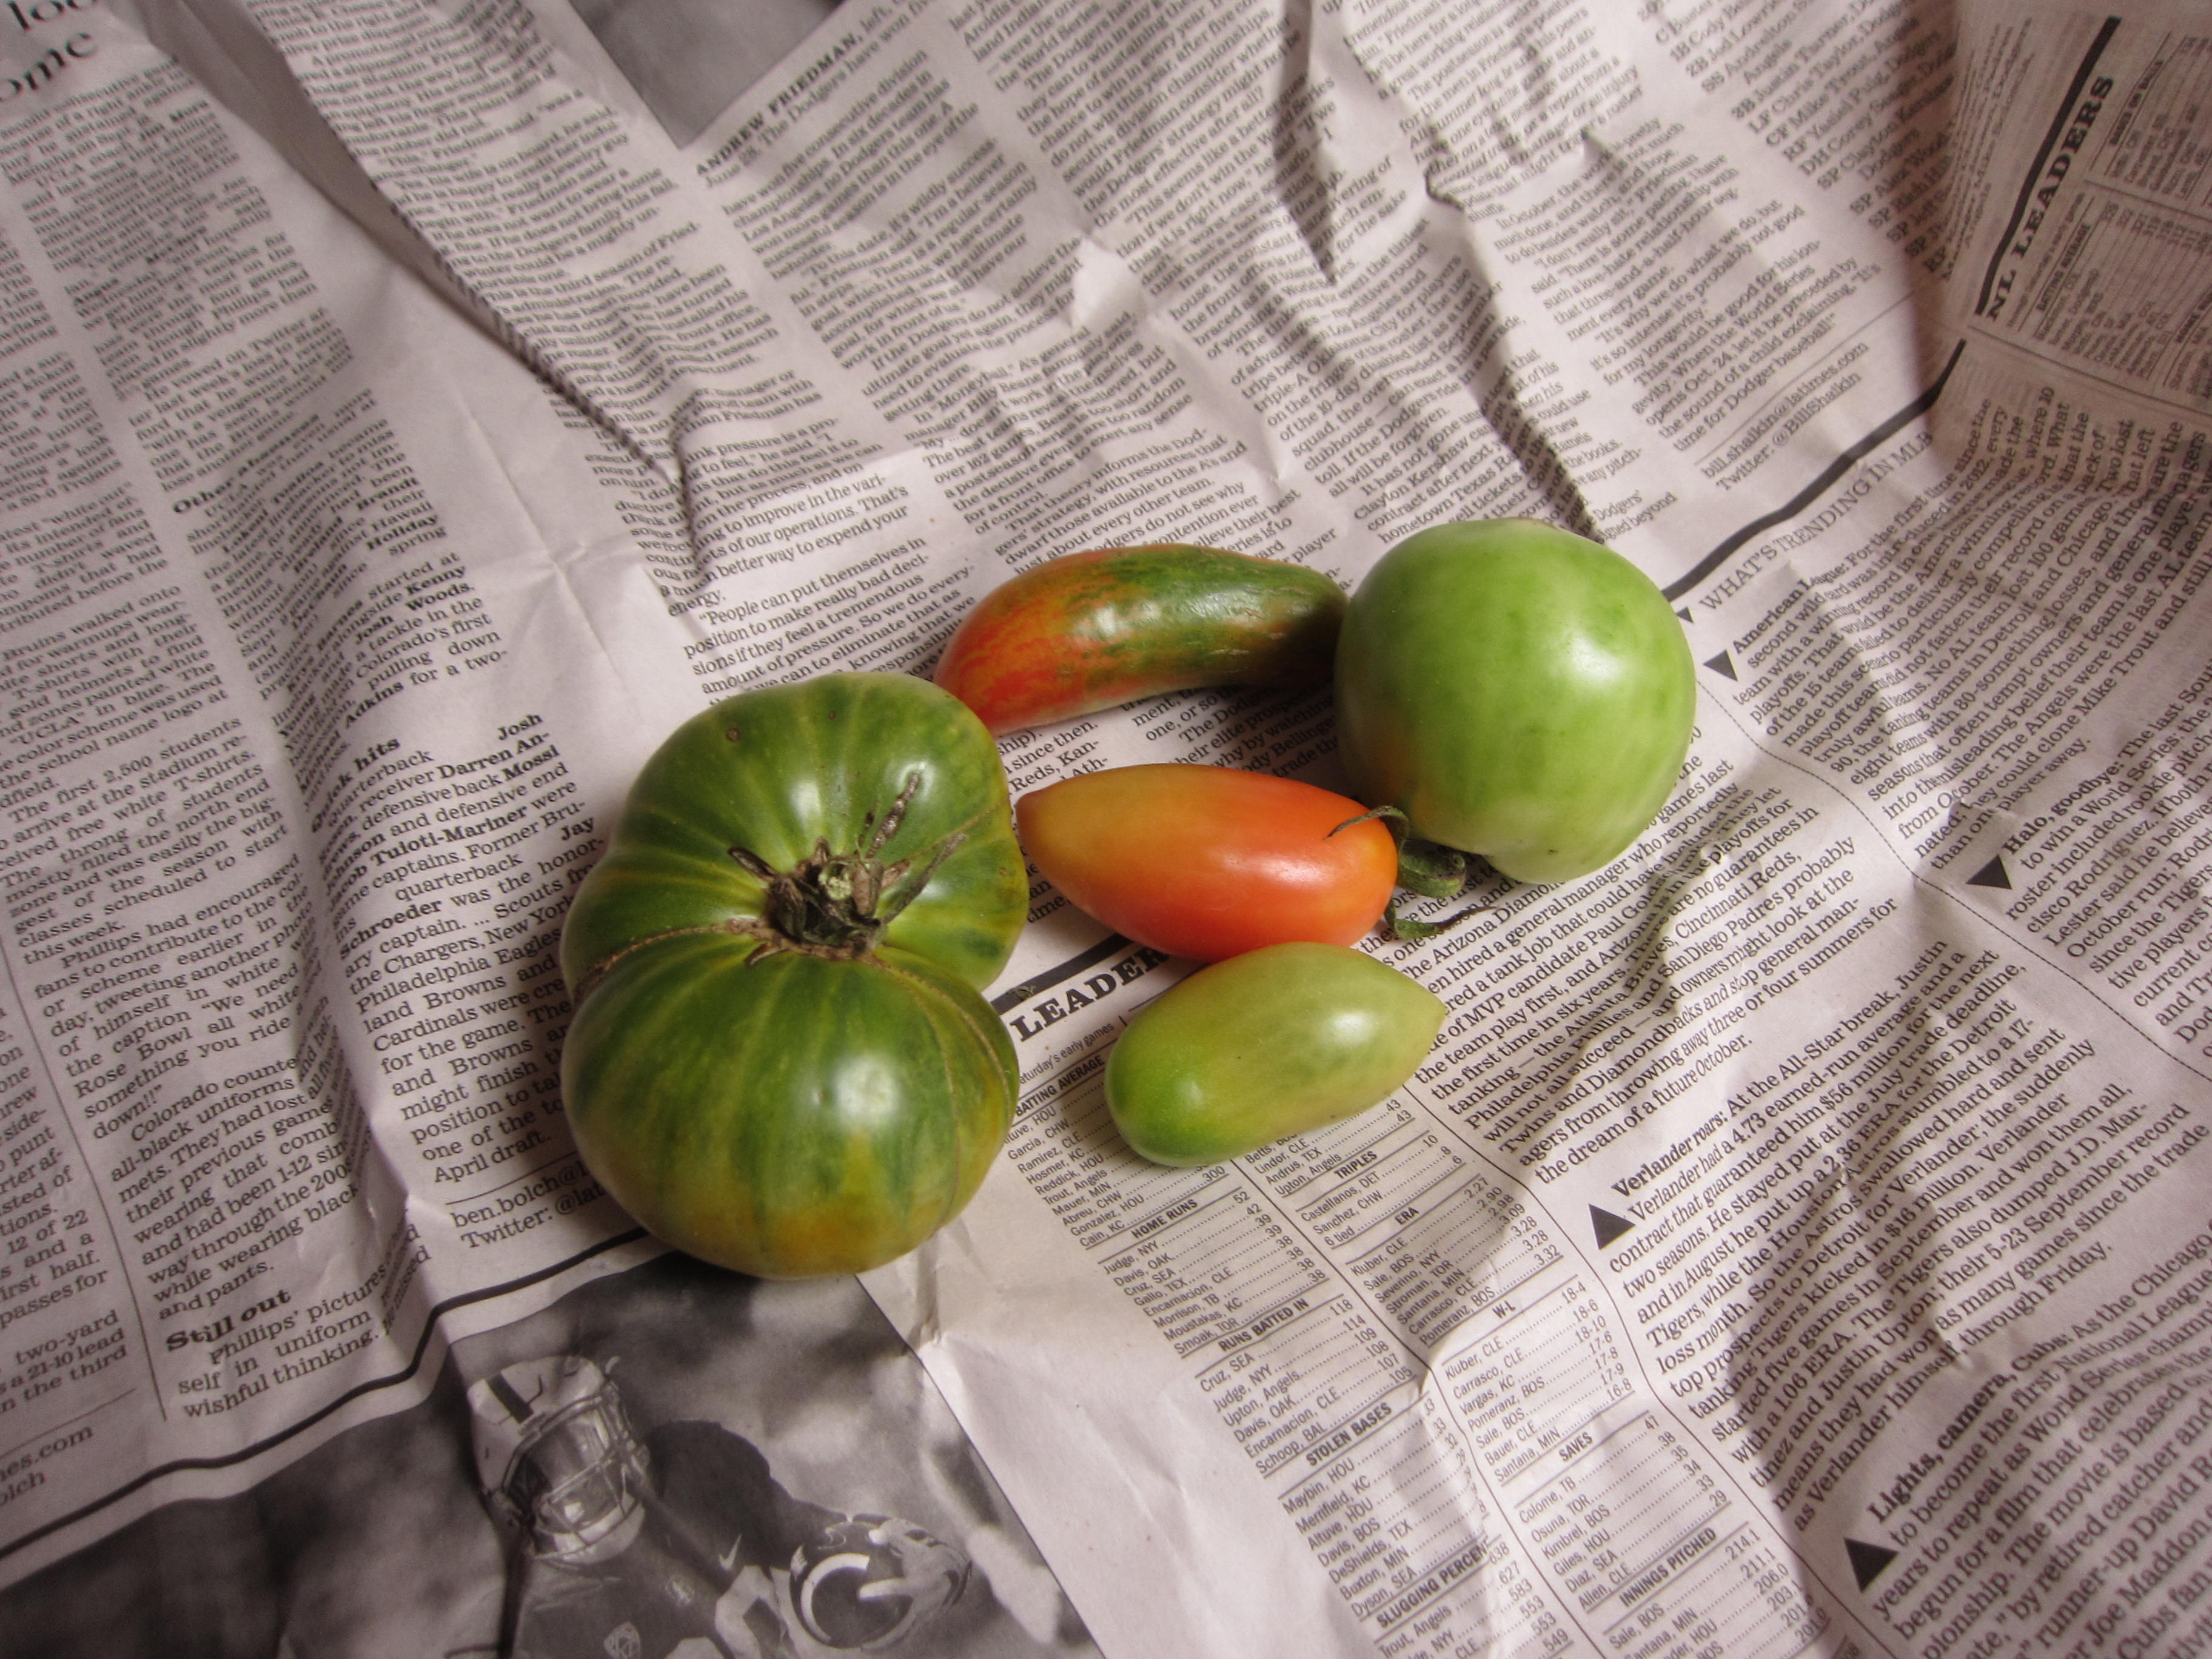 Ripening green tomatoes